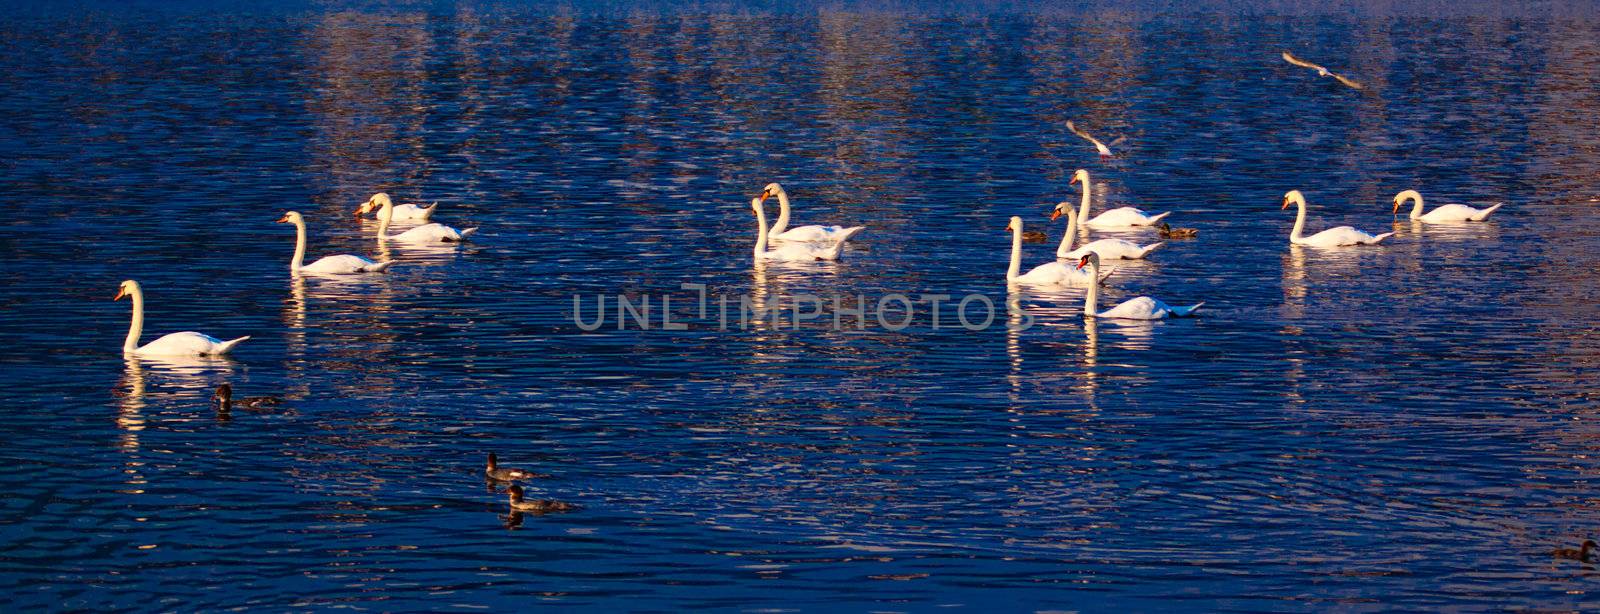 A group of swan at Lake Geneva, Switzerland